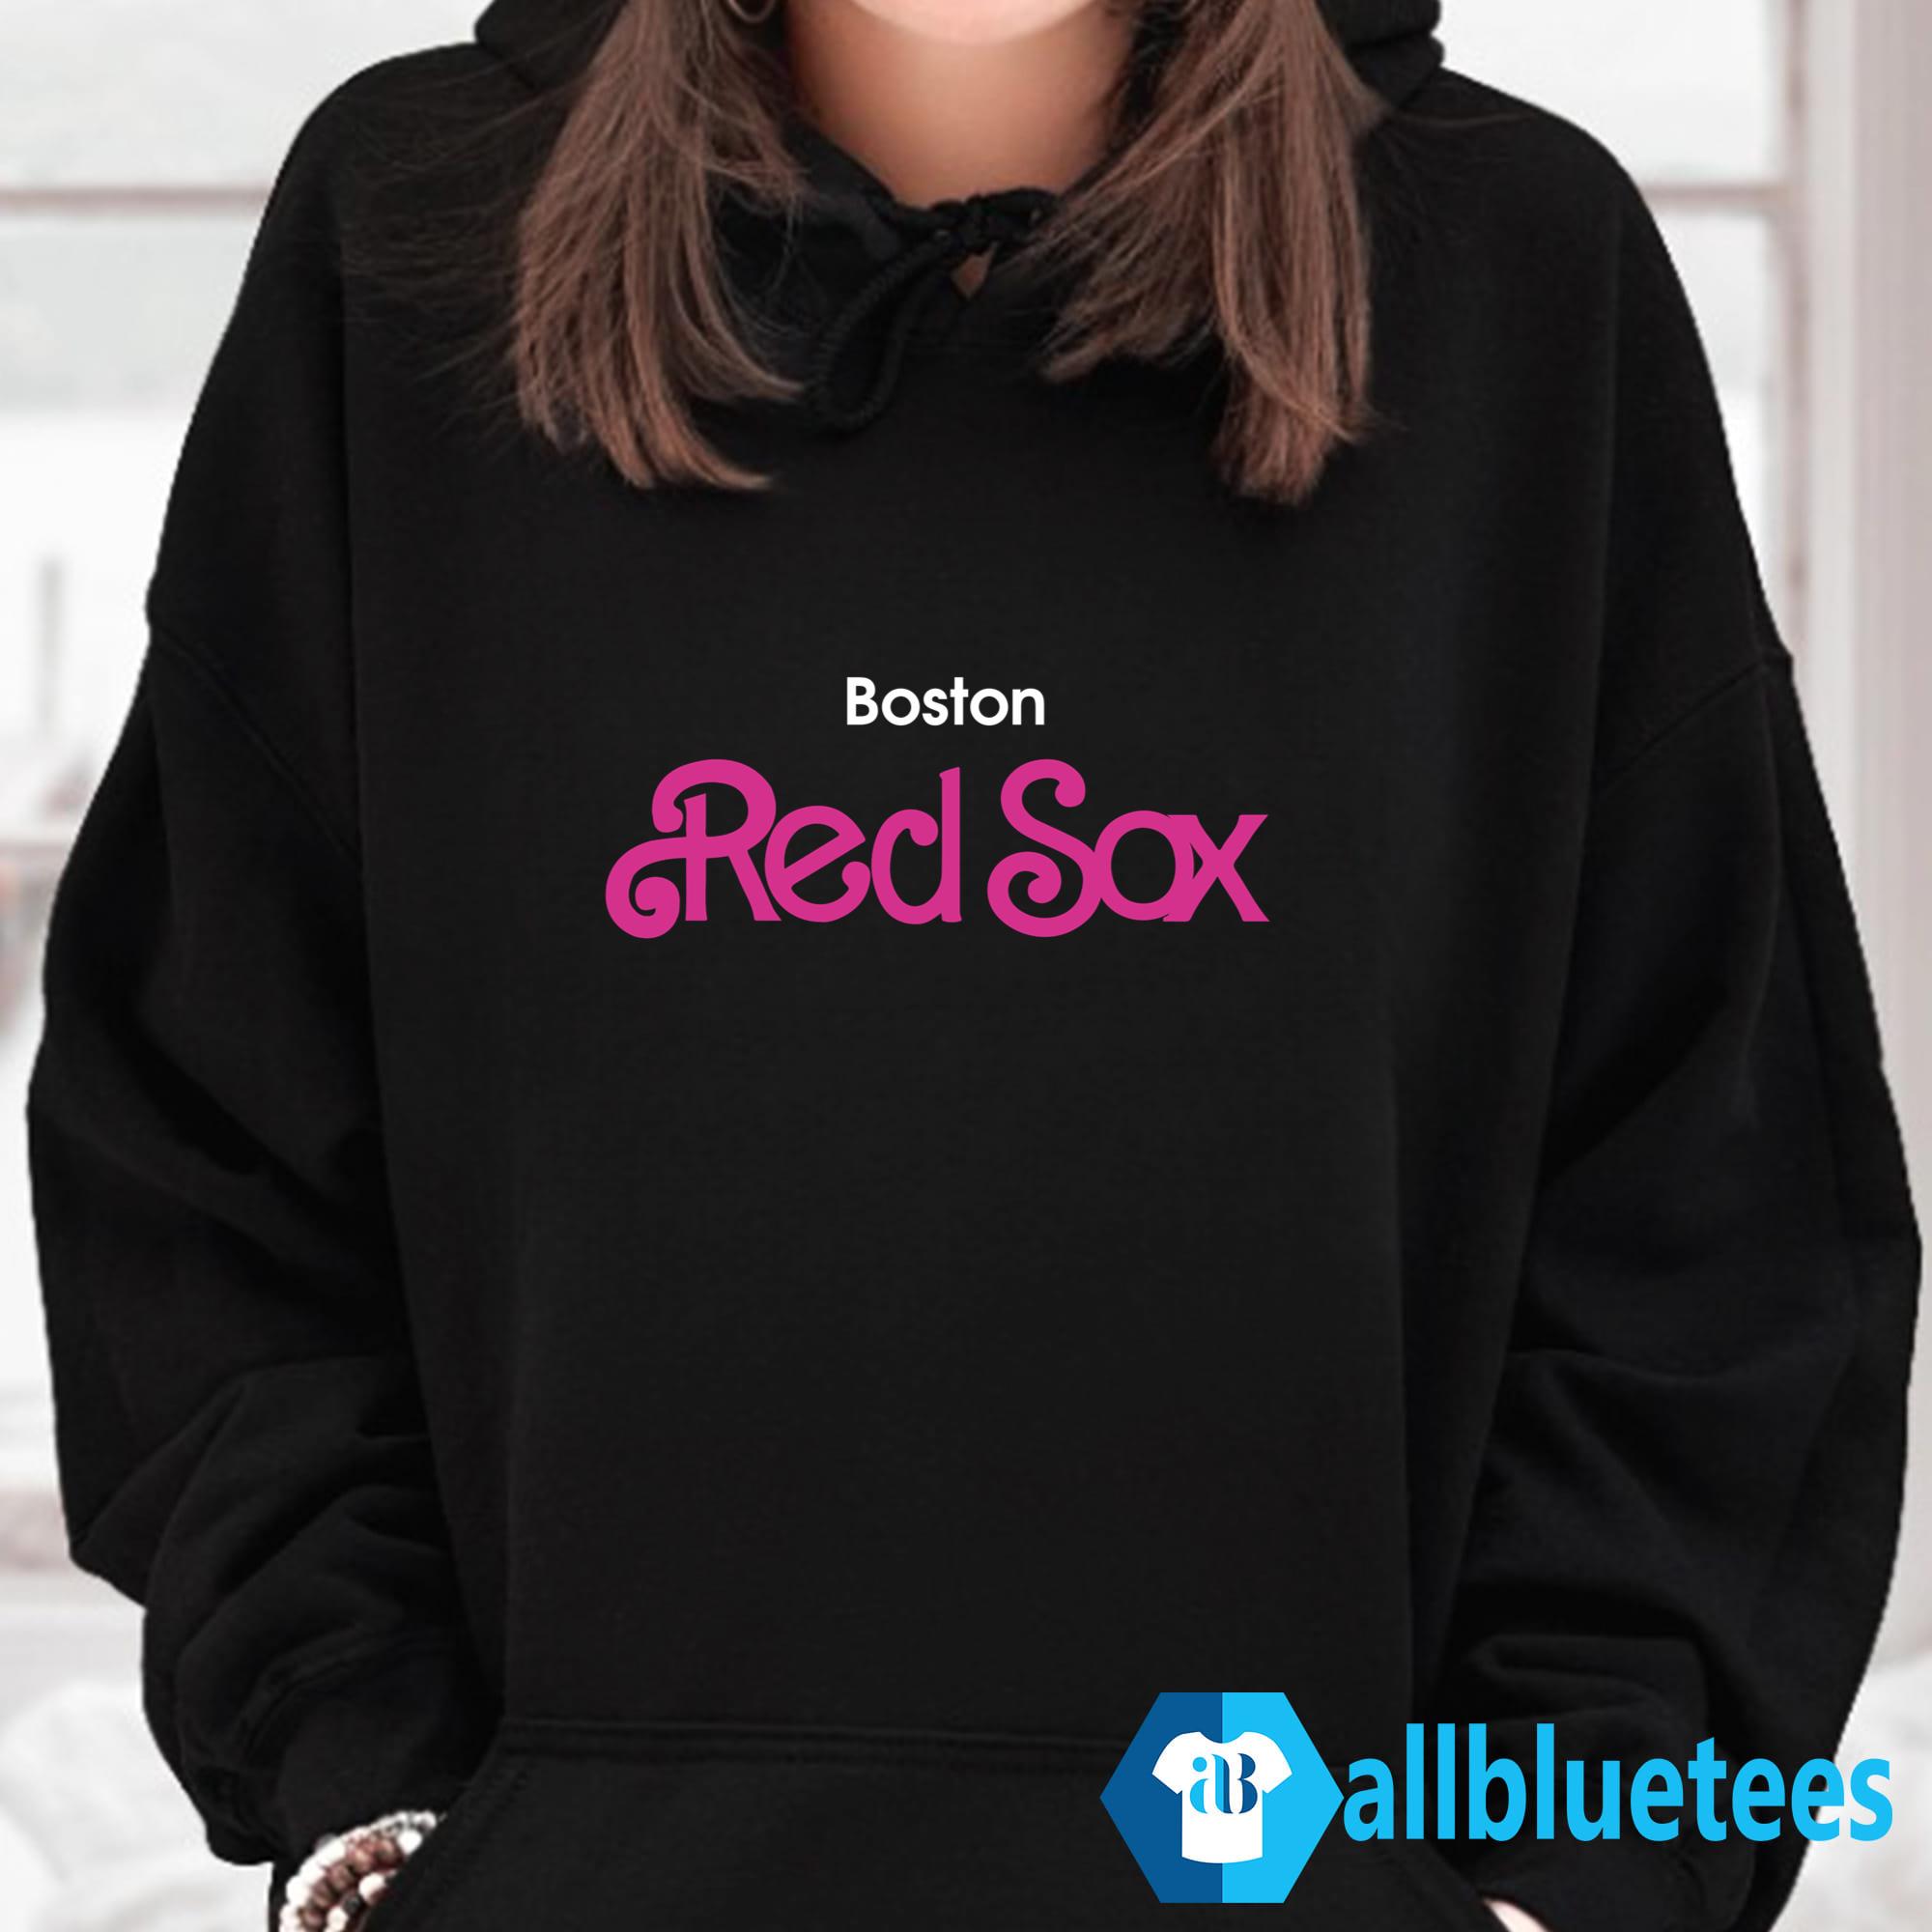 Barbie Night Kenway Park Boston Red Sox T-Shirt - Lelemoon